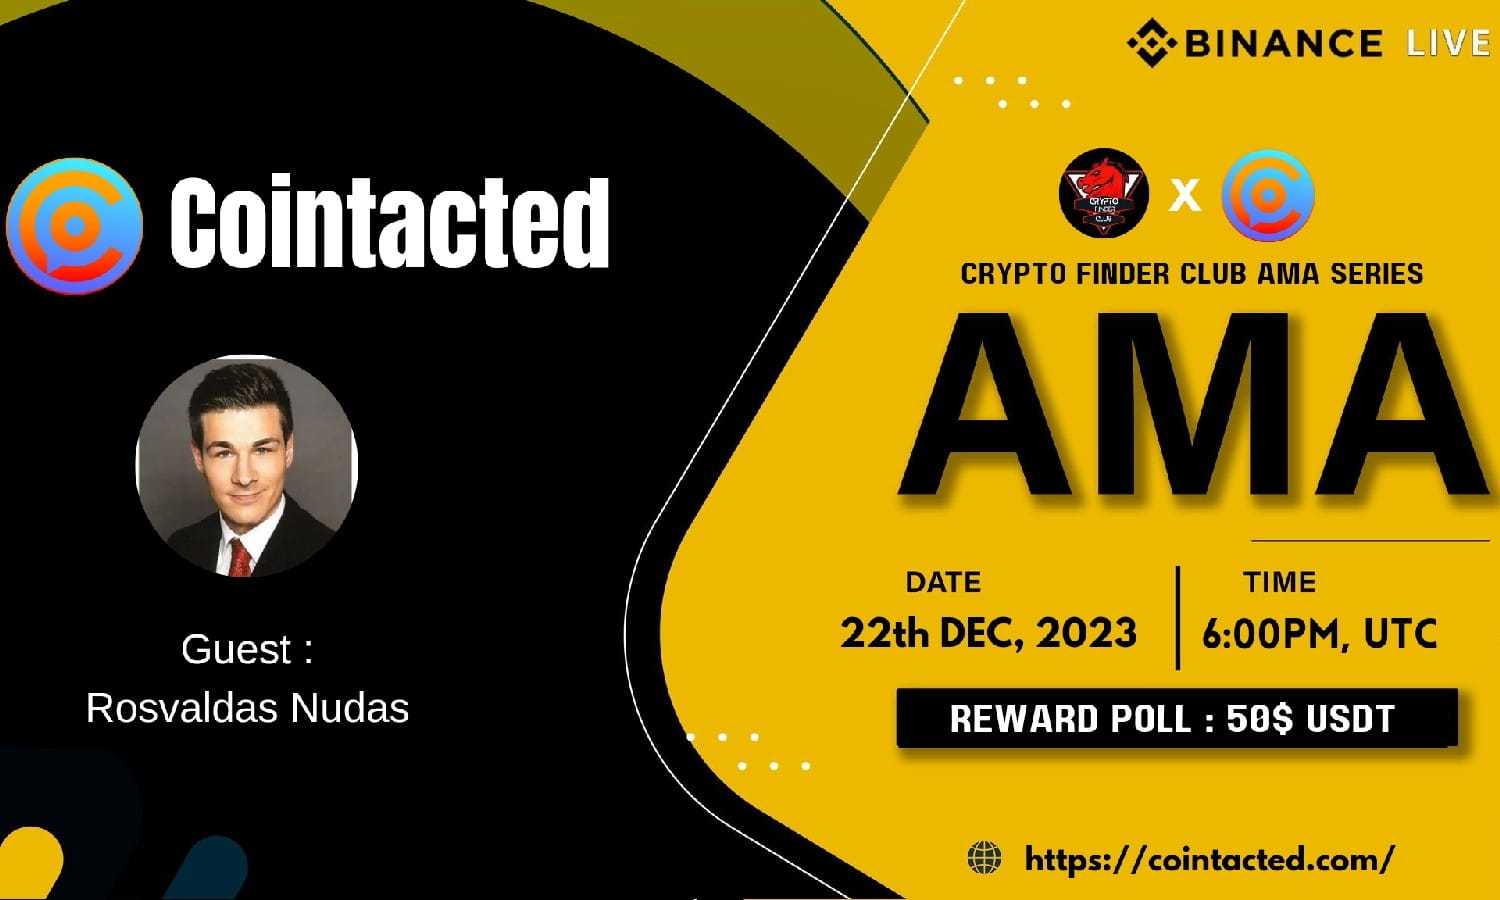 CryptoFinderClub AMA with "Cointacted" || 50$ Reward